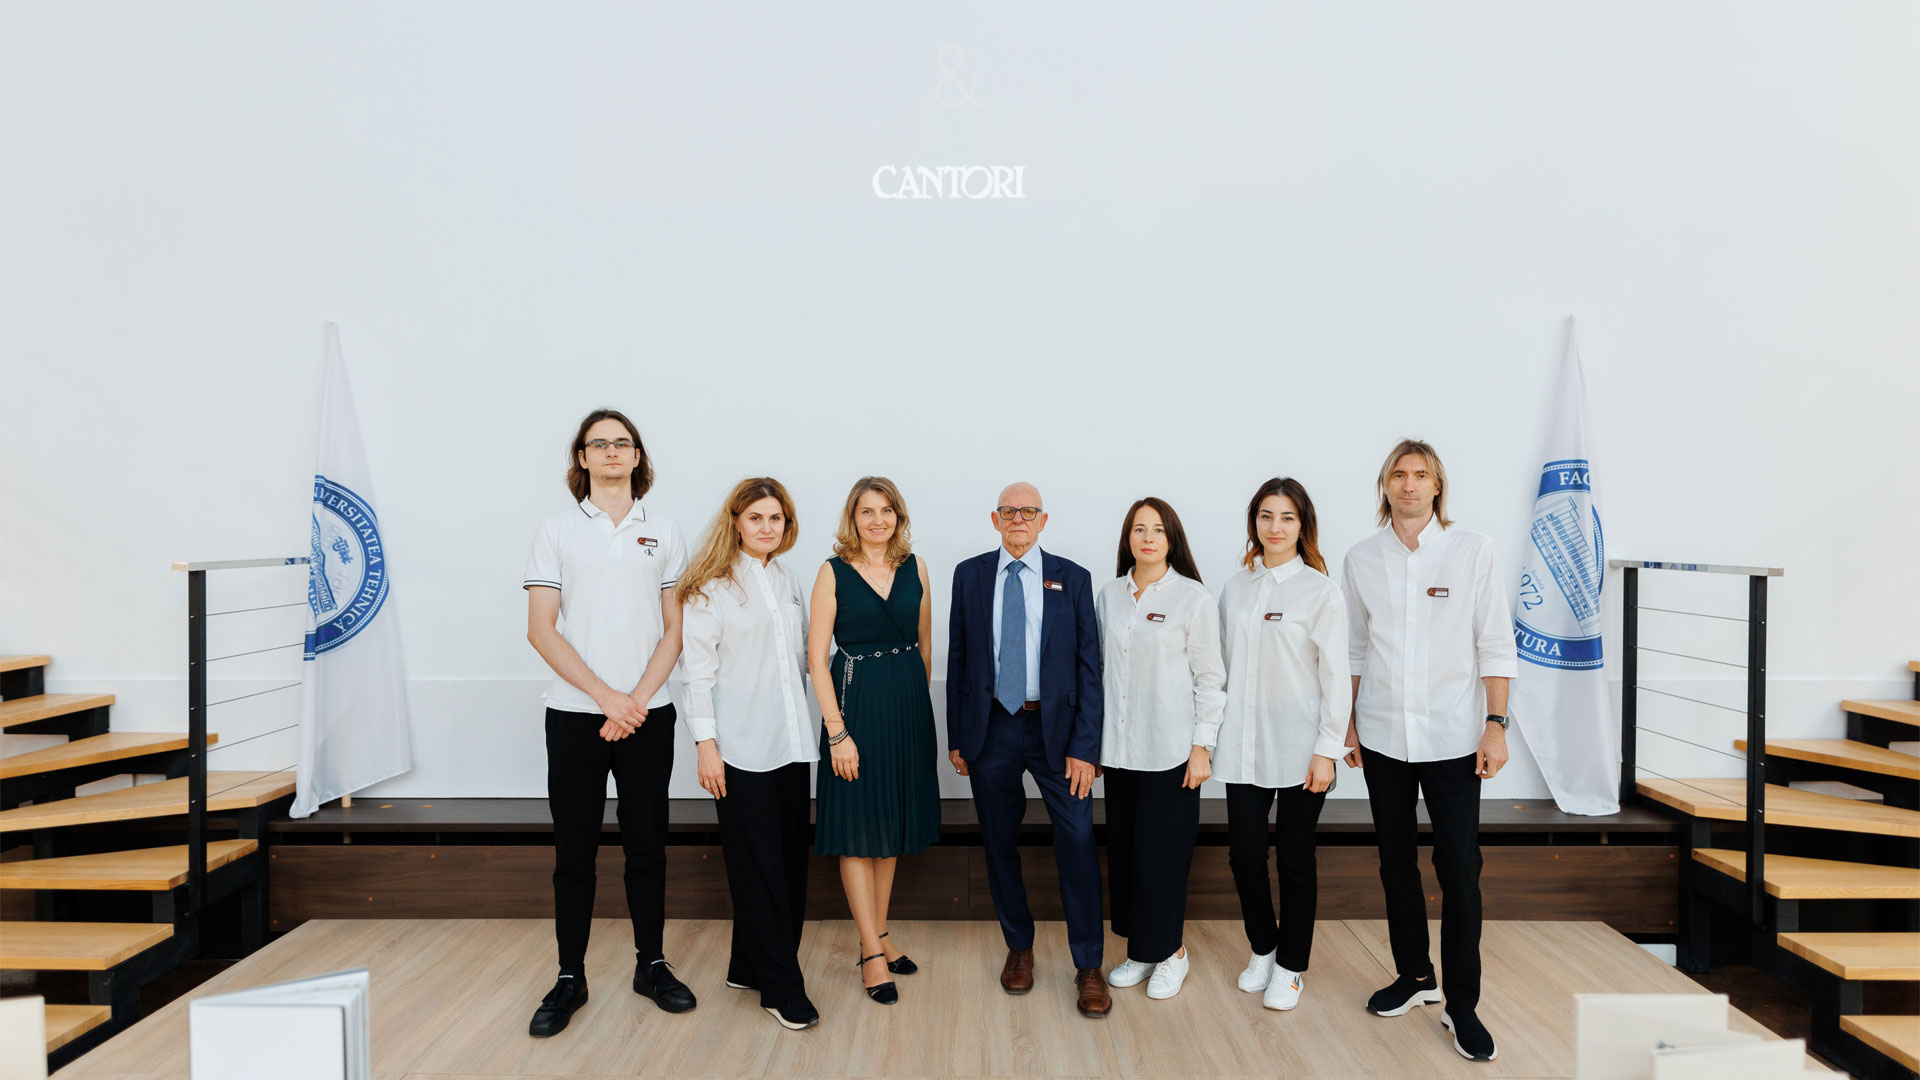 Cantori launches the "Design-concept at the mobilierului în stil Cantori" competition with the University of Chișinău (Moldova) - Cantori